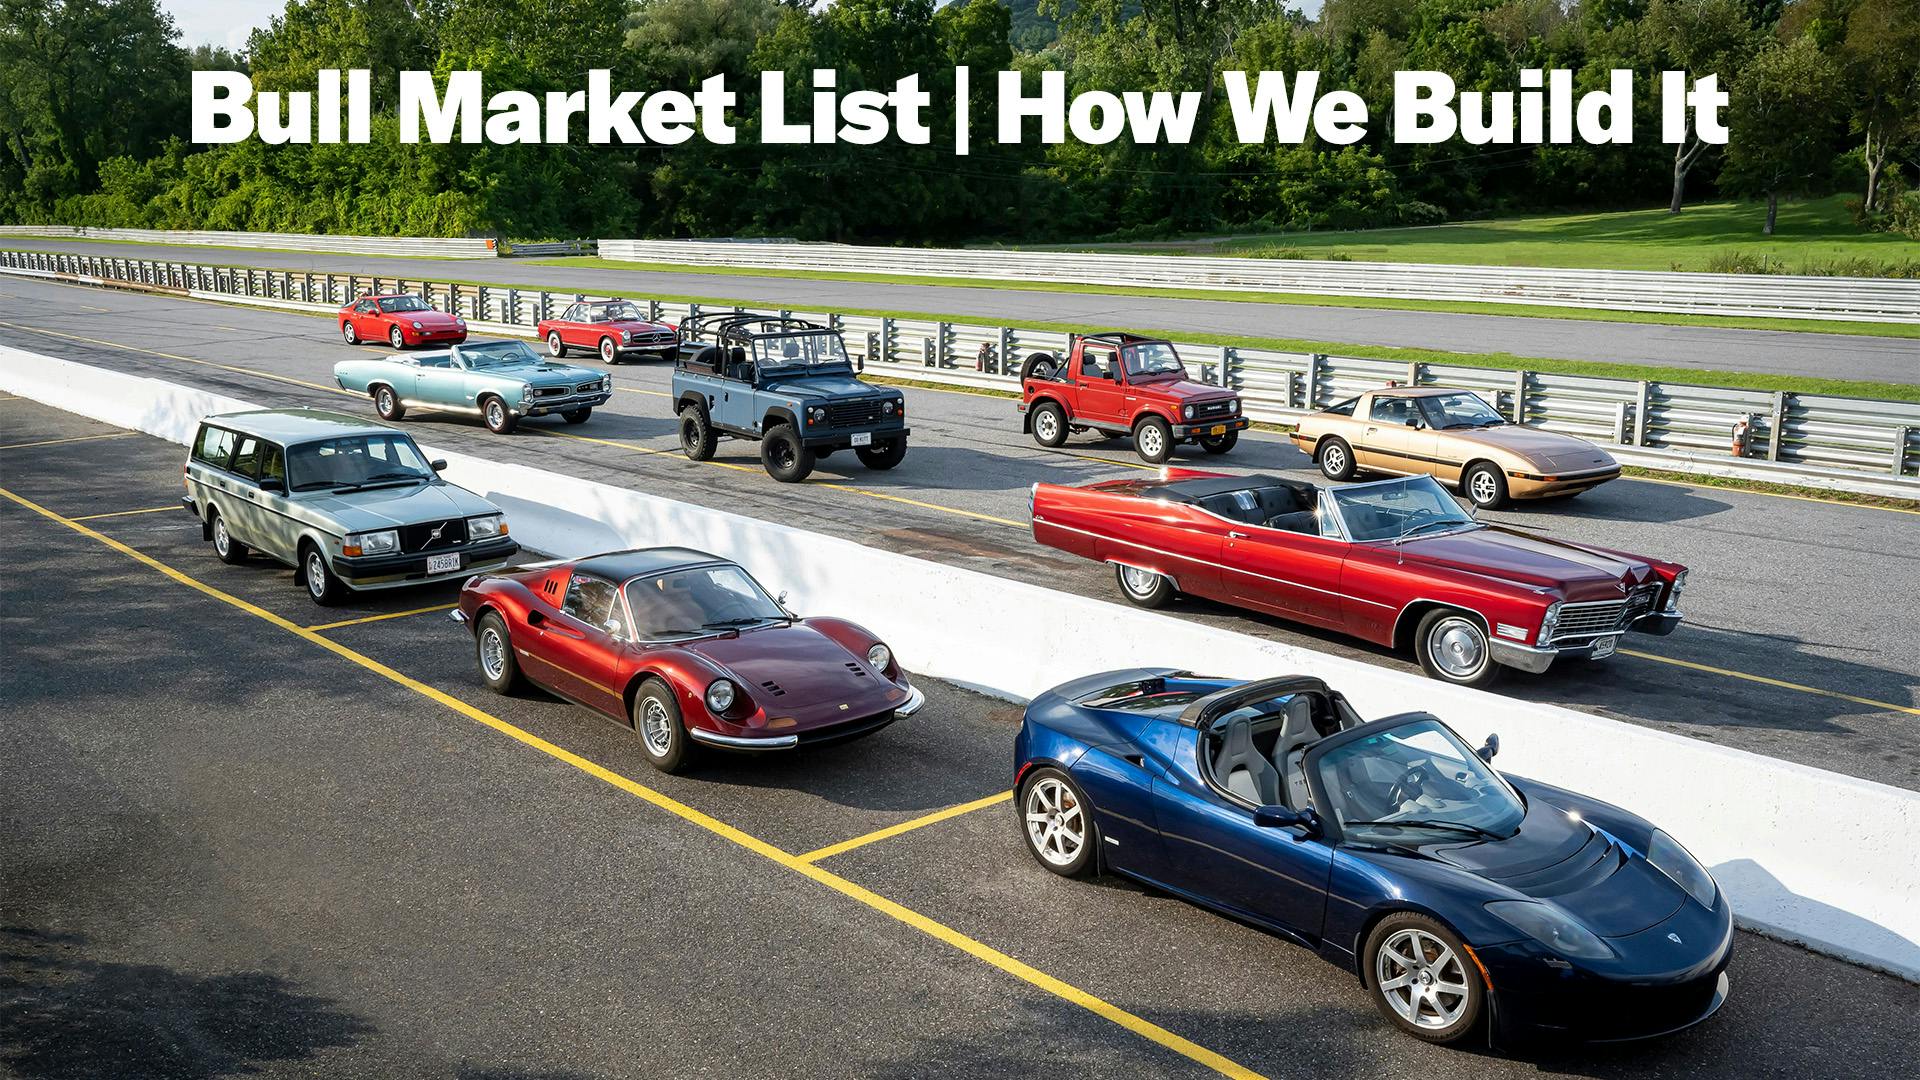 Bull Market List – How We Build It